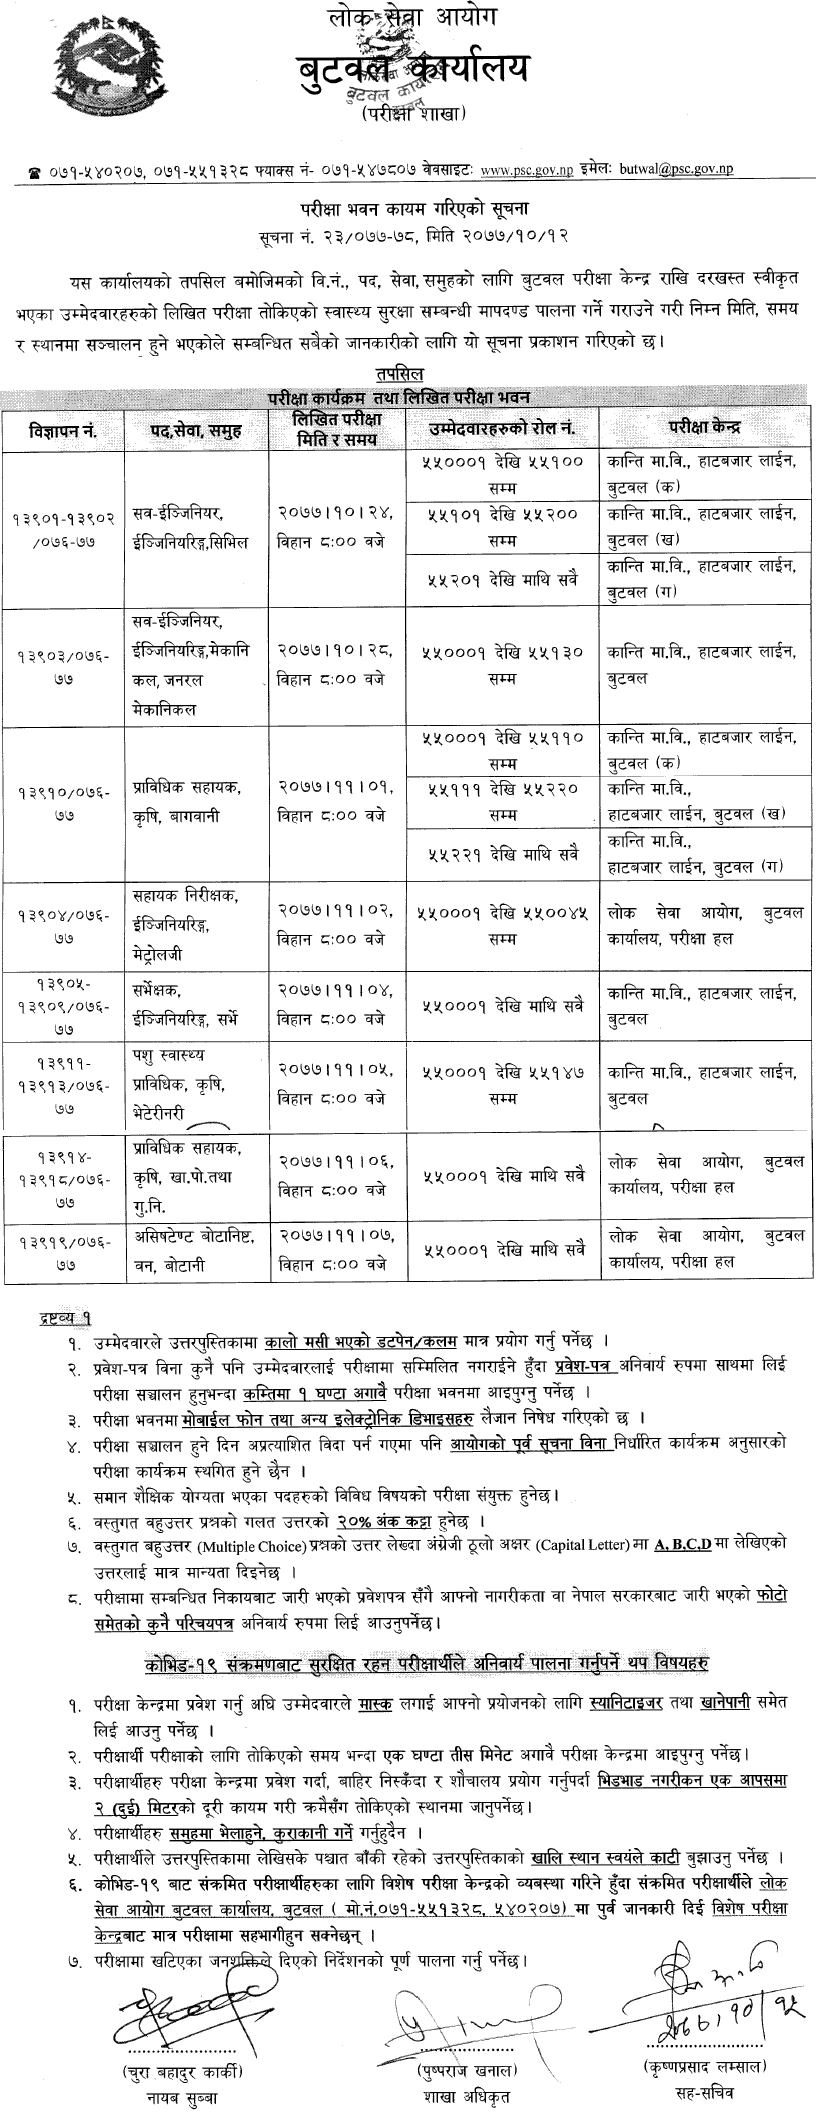 Nayab Subba (Technical) Written Exam Center Butwal - Lok Sewa Aayog